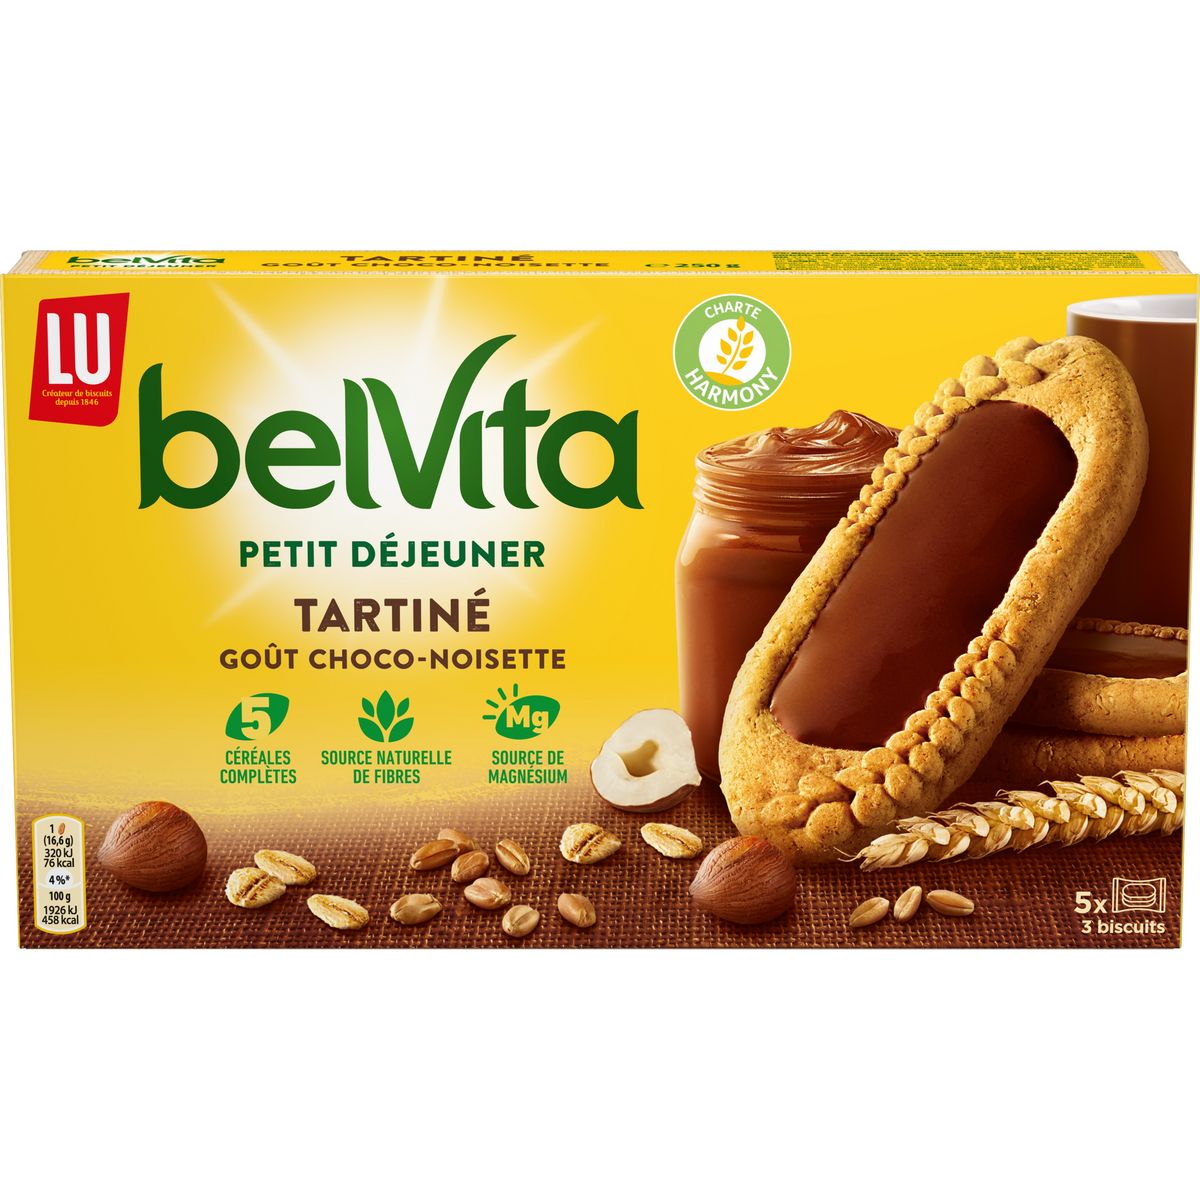 BELVITA Biscuits petit-déjeuner tartiné goût chocolat noisette, sachets fraîcheur 5x3 biscuits 250g